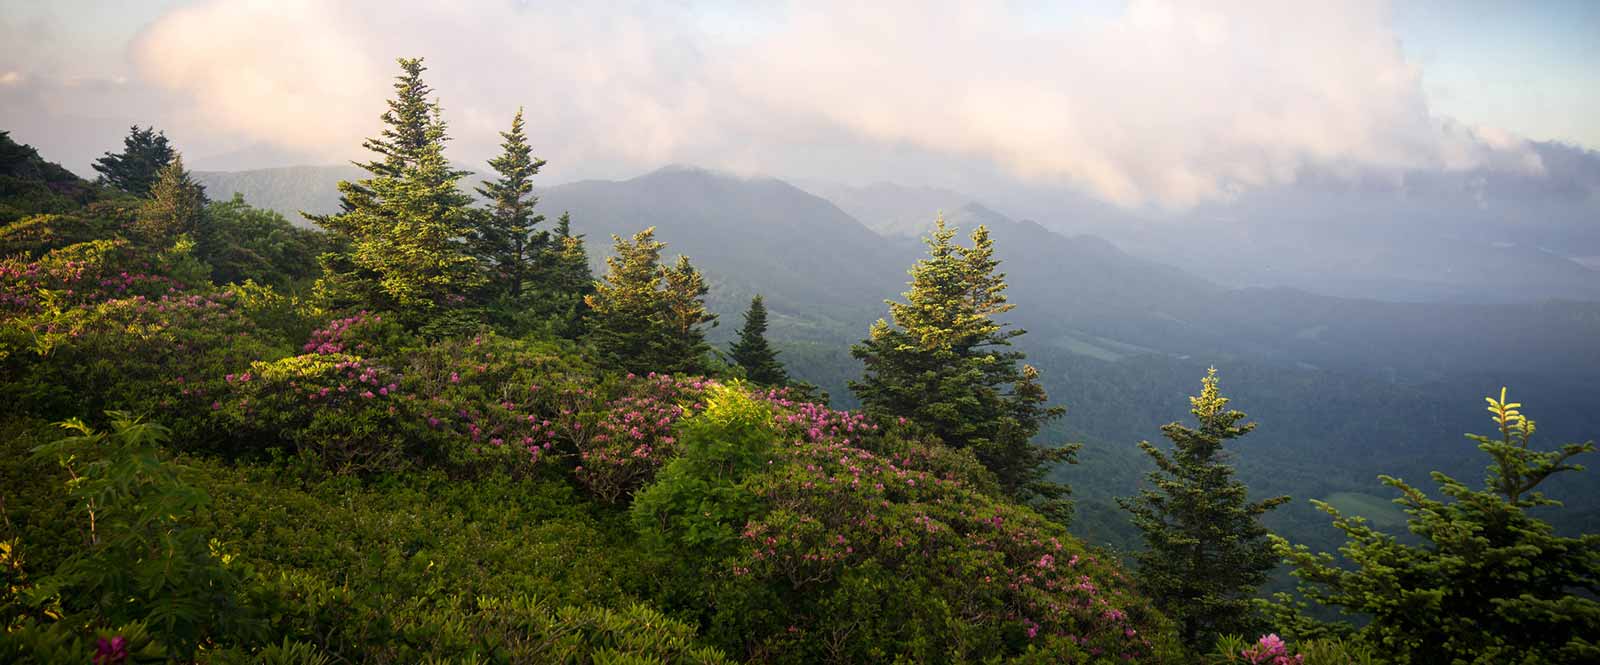 Blue Ridge mountains and trees